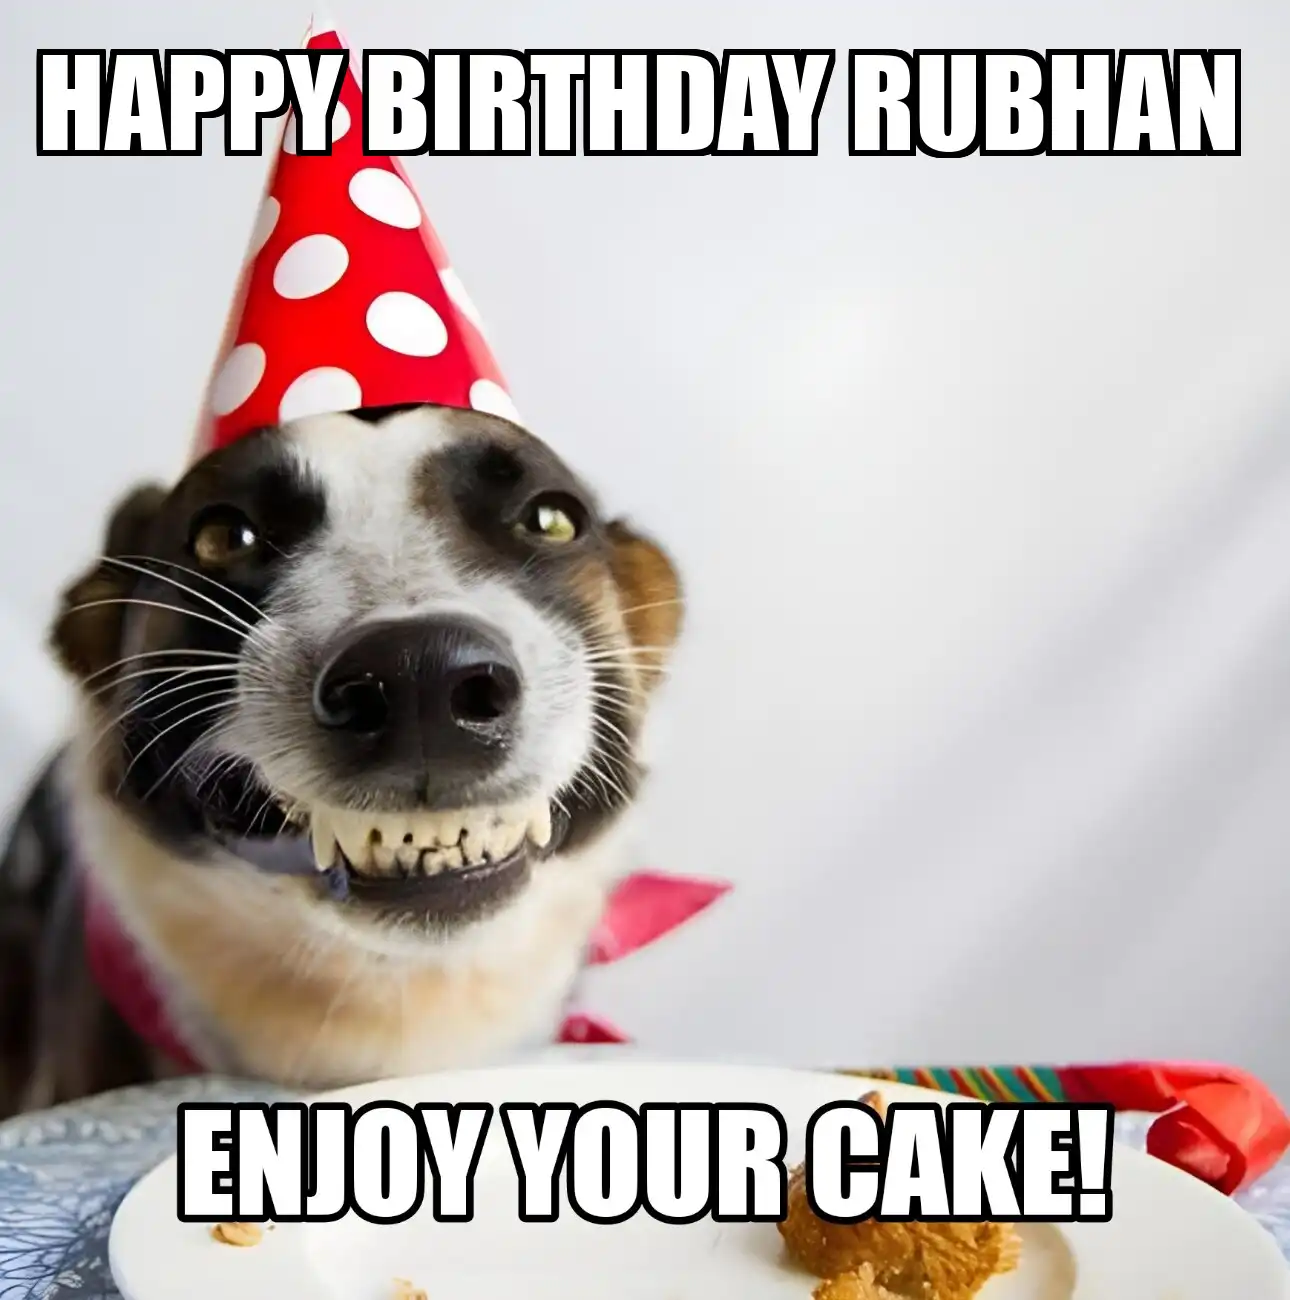 Happy Birthday Rubhan Enjoy Your Cake Dog Meme